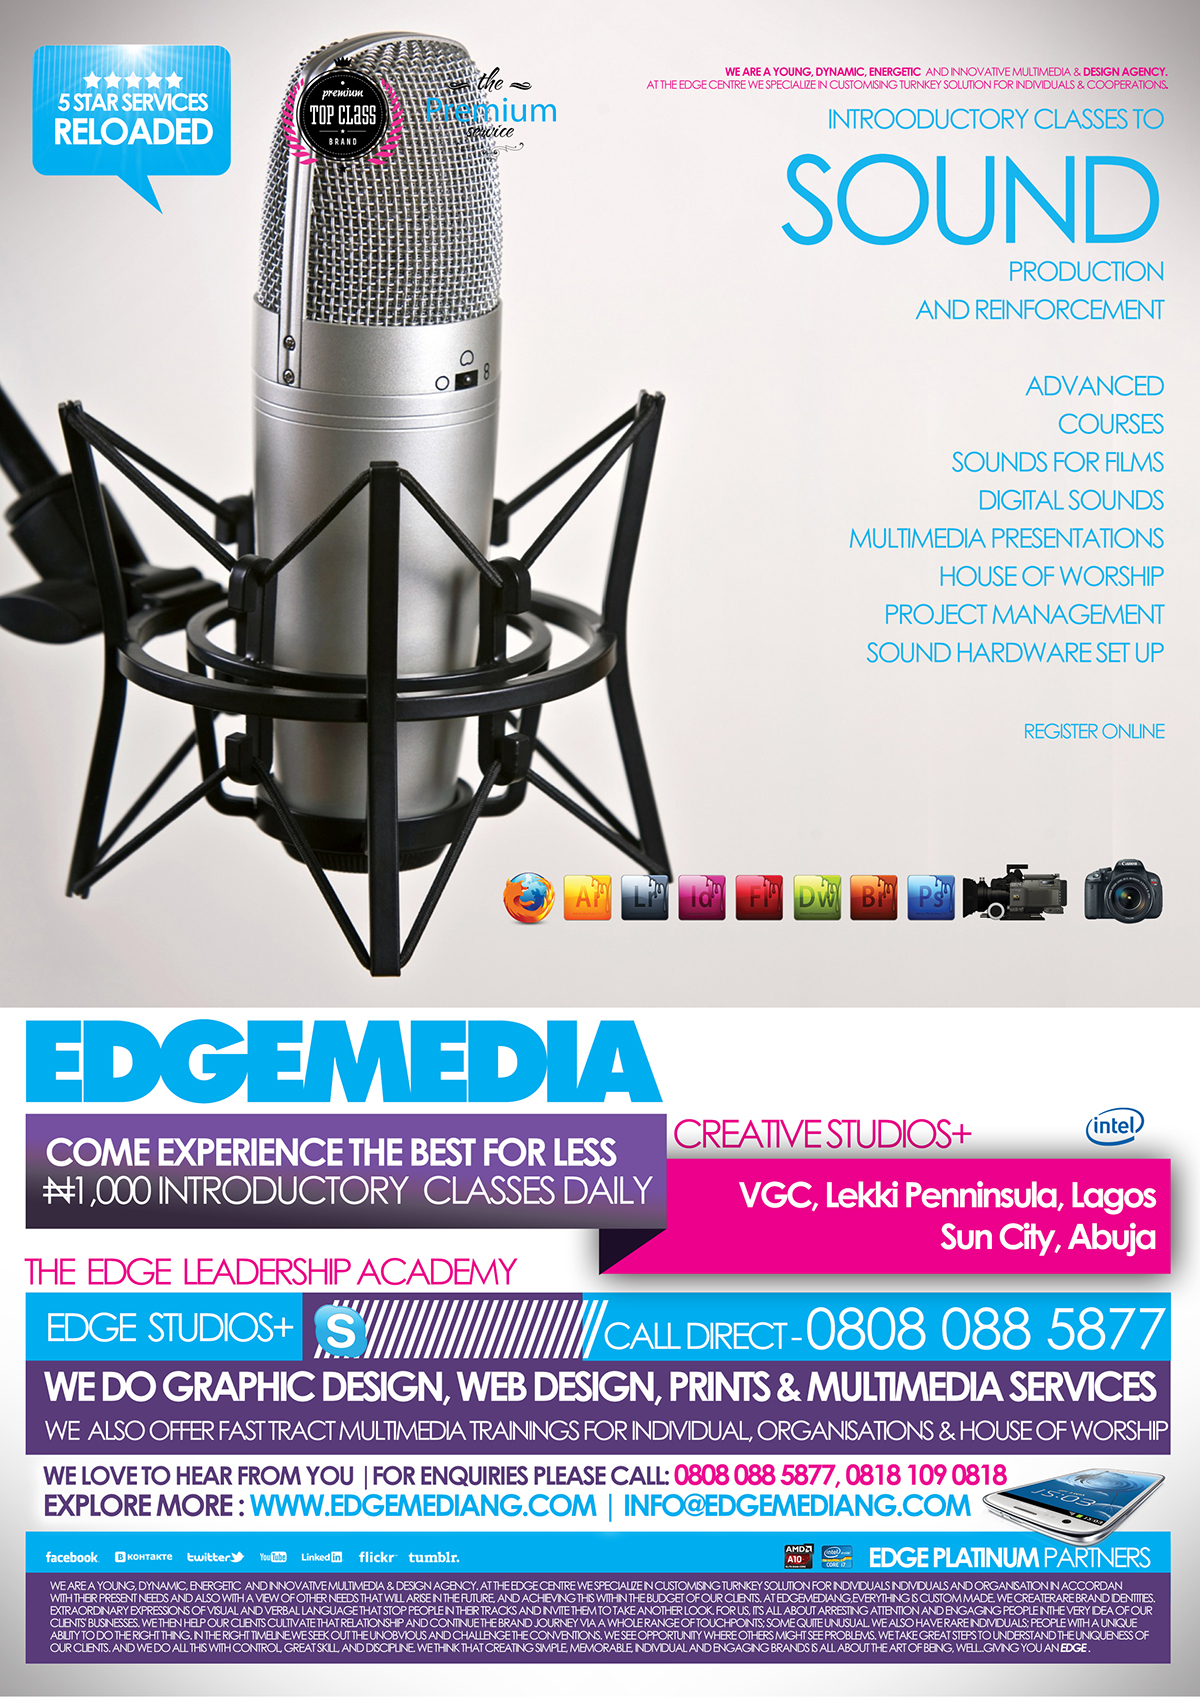 Introductory Classes_Edgemedia Multimedia academy